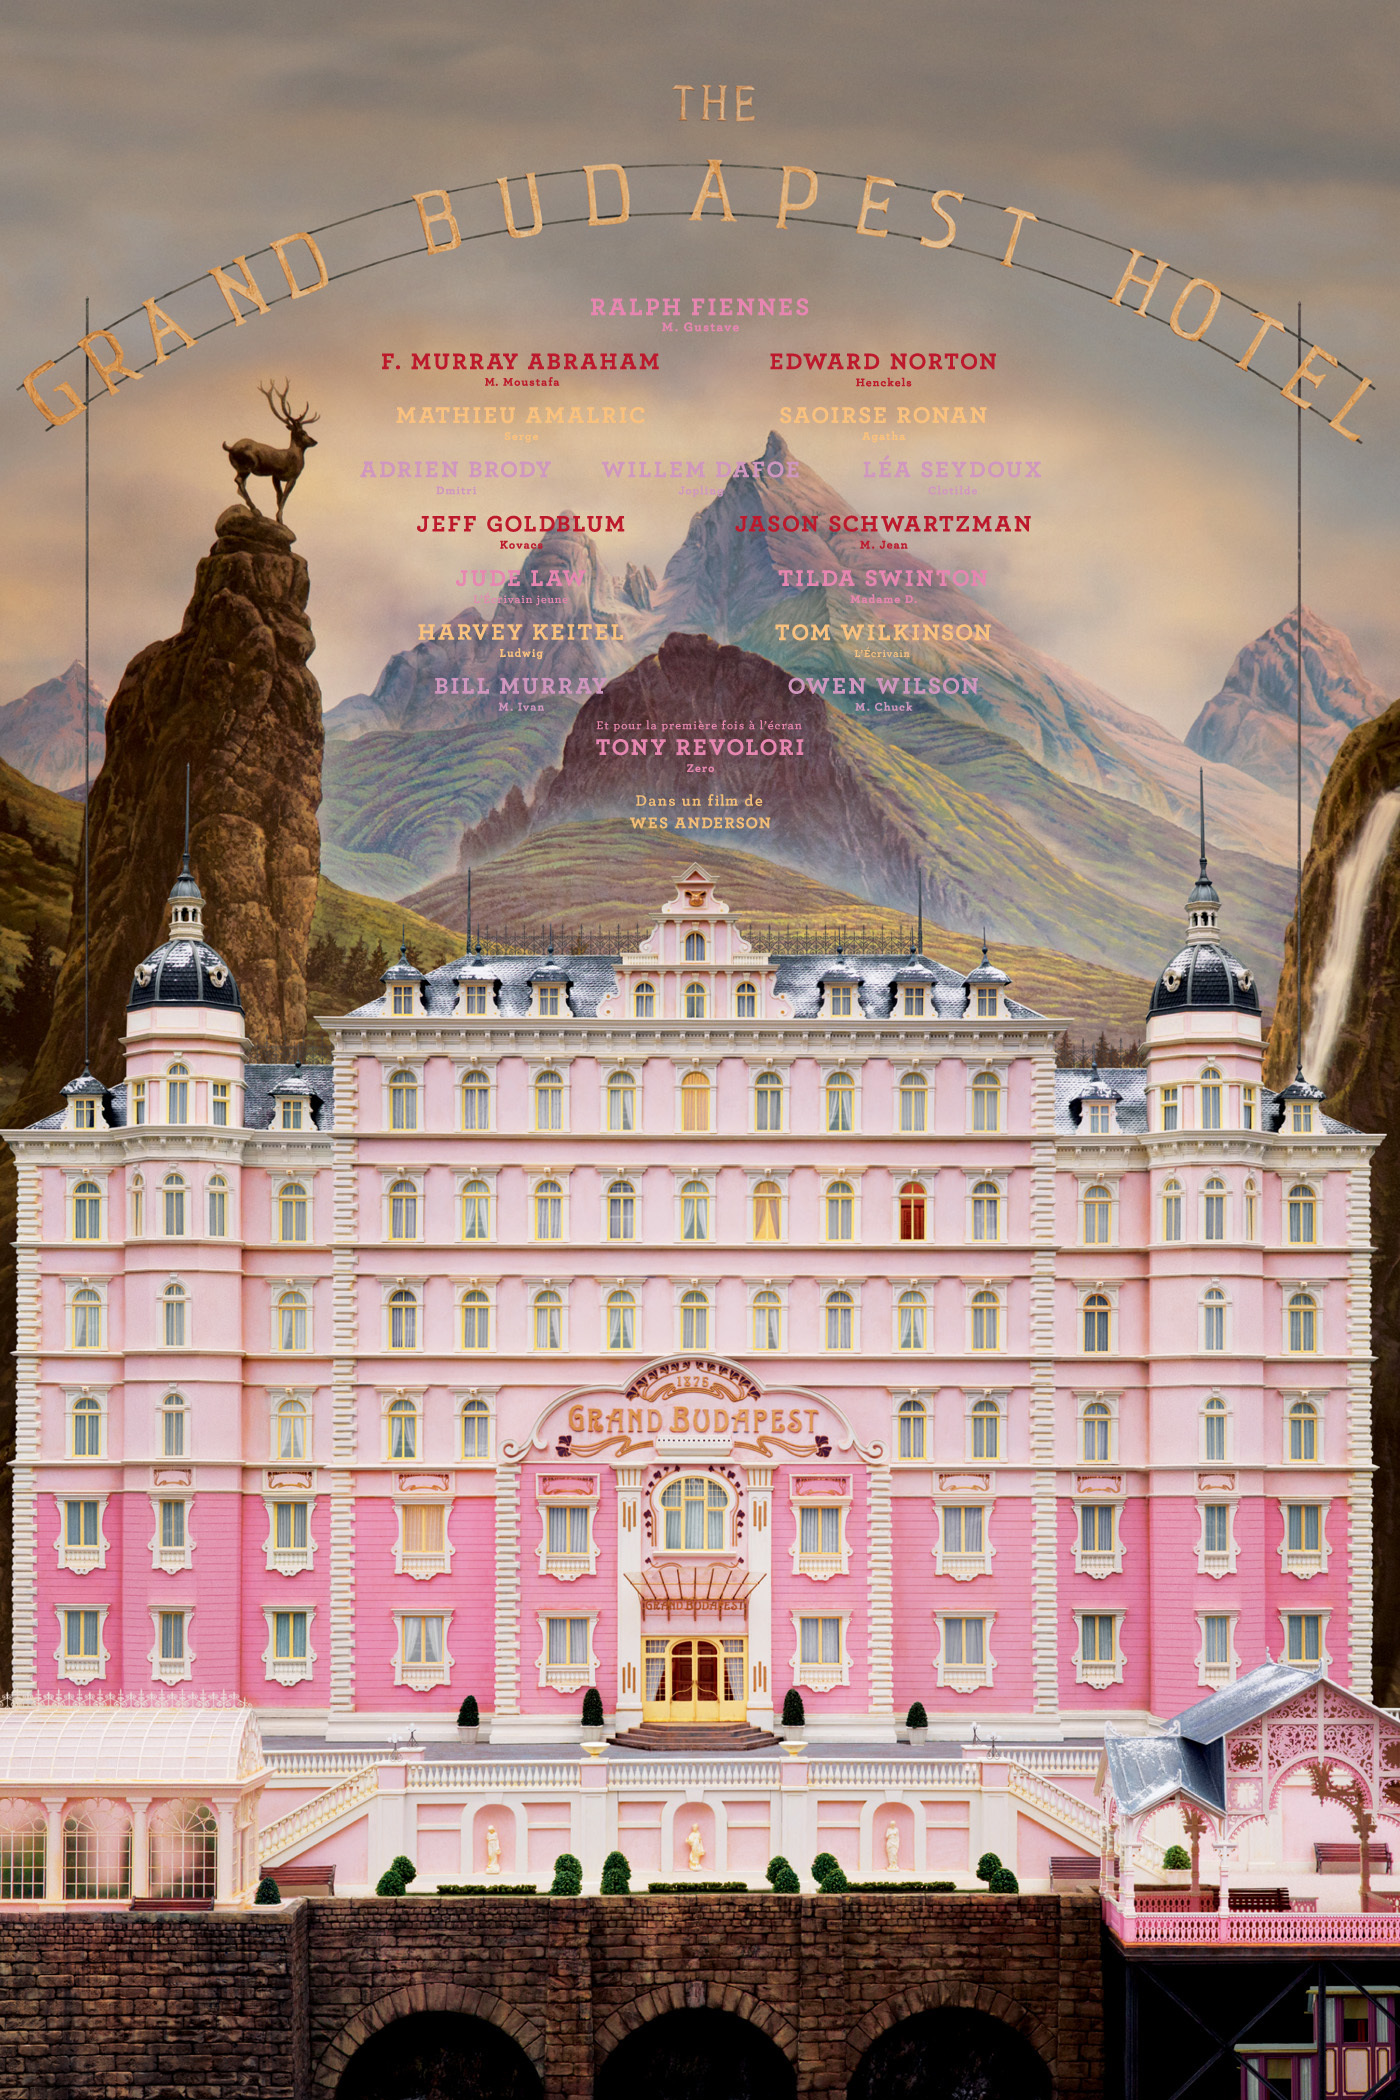 The grand budapest hotel (2014)dvdplanetstorepk